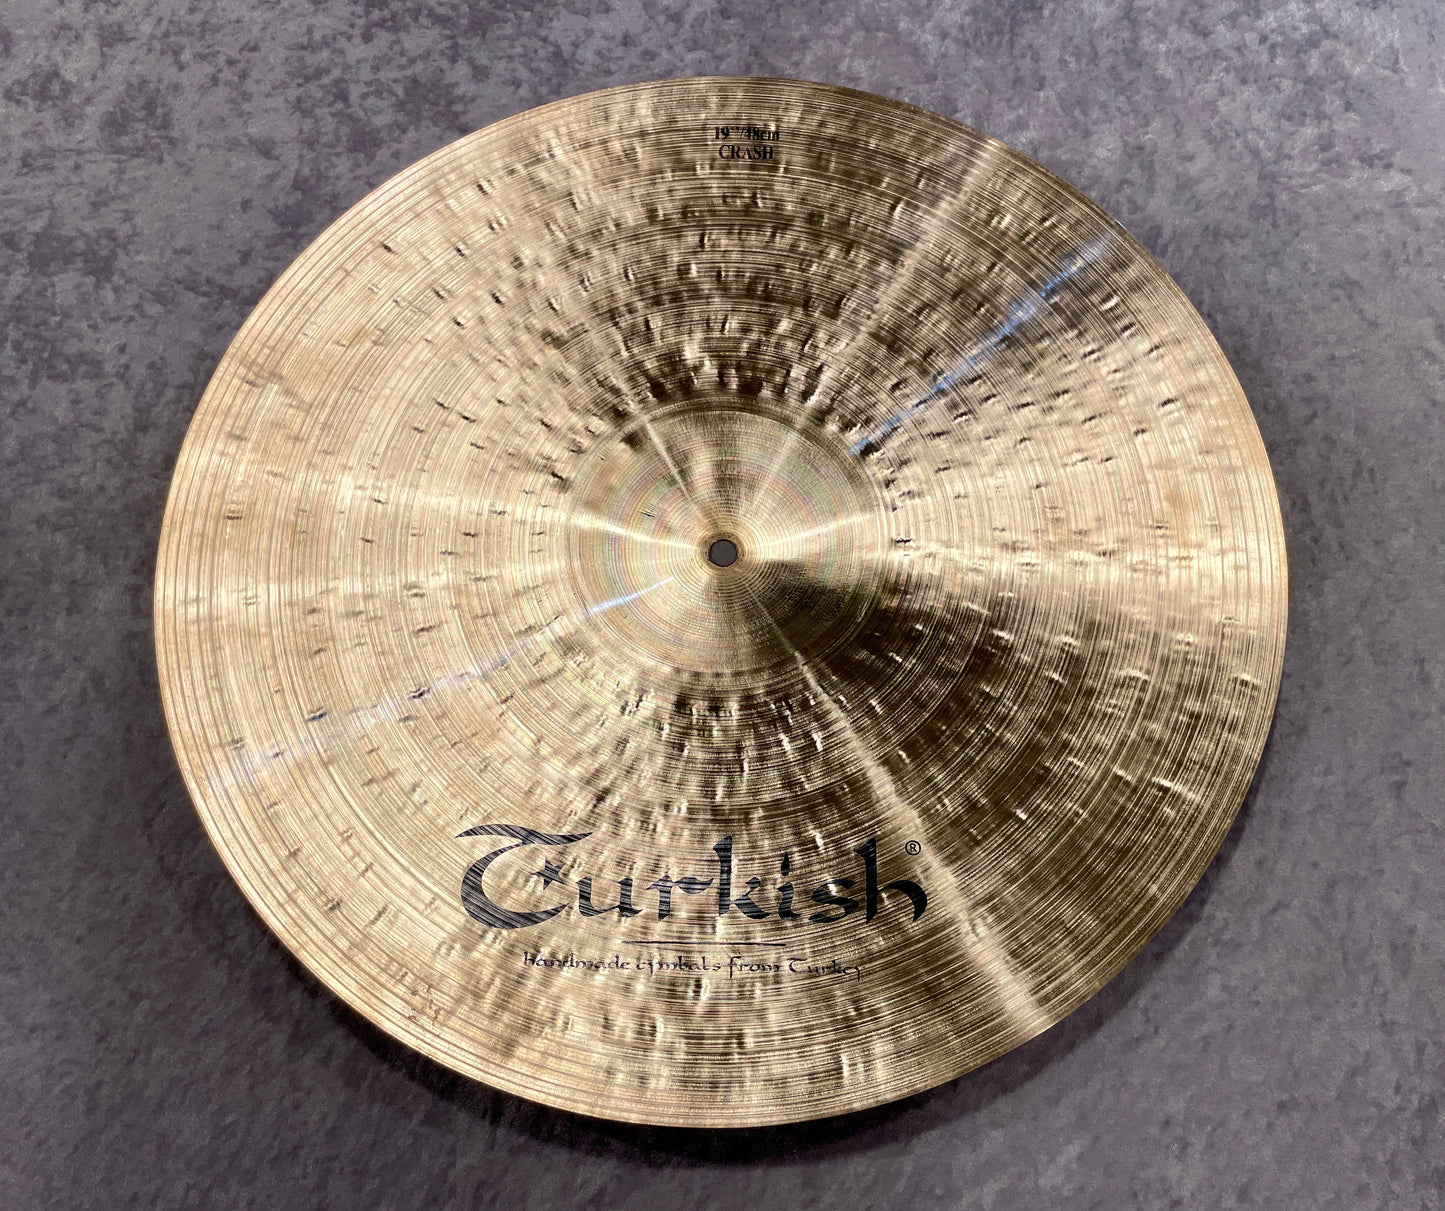 19" Turkish Cymbals Classic Series Crash Cymbal 1626g *Sound File*